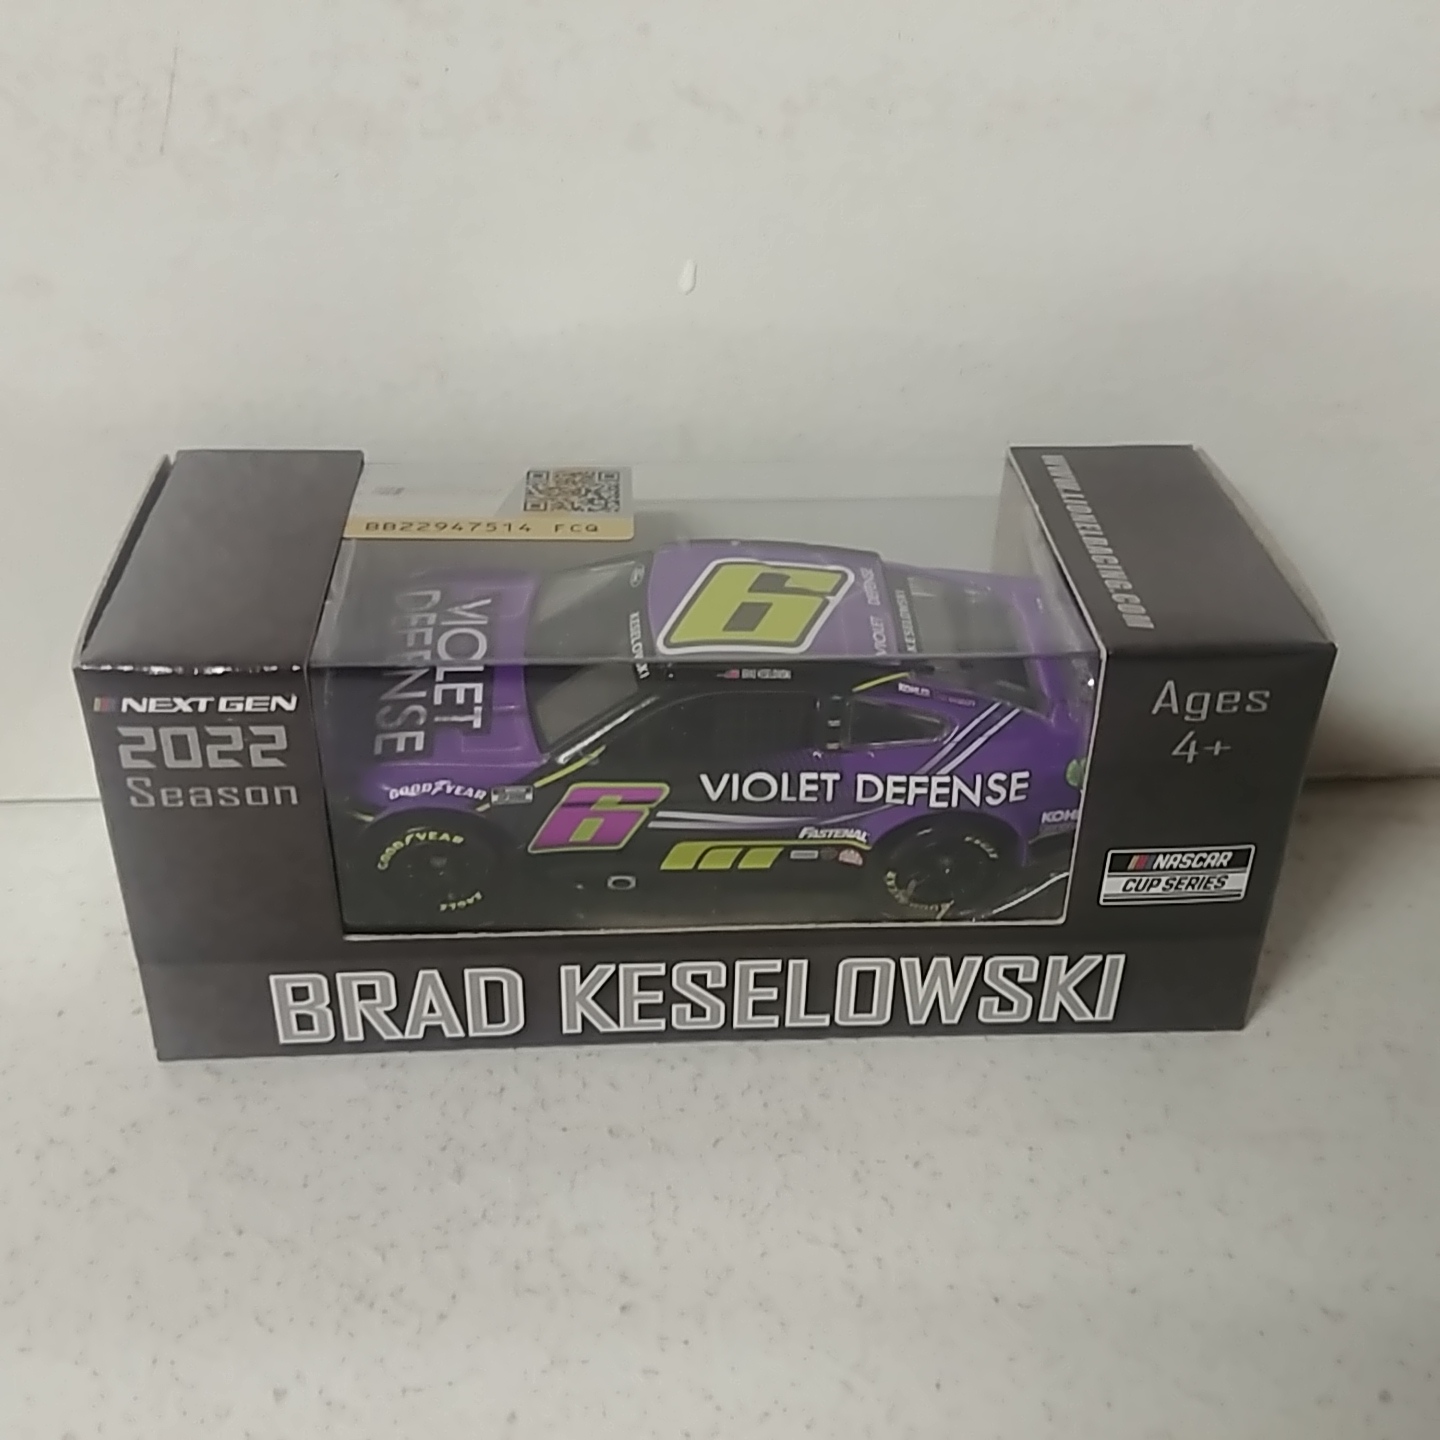 2022 Brad Keselowski 1/64th Violet Defense "Next Gen" Mustang